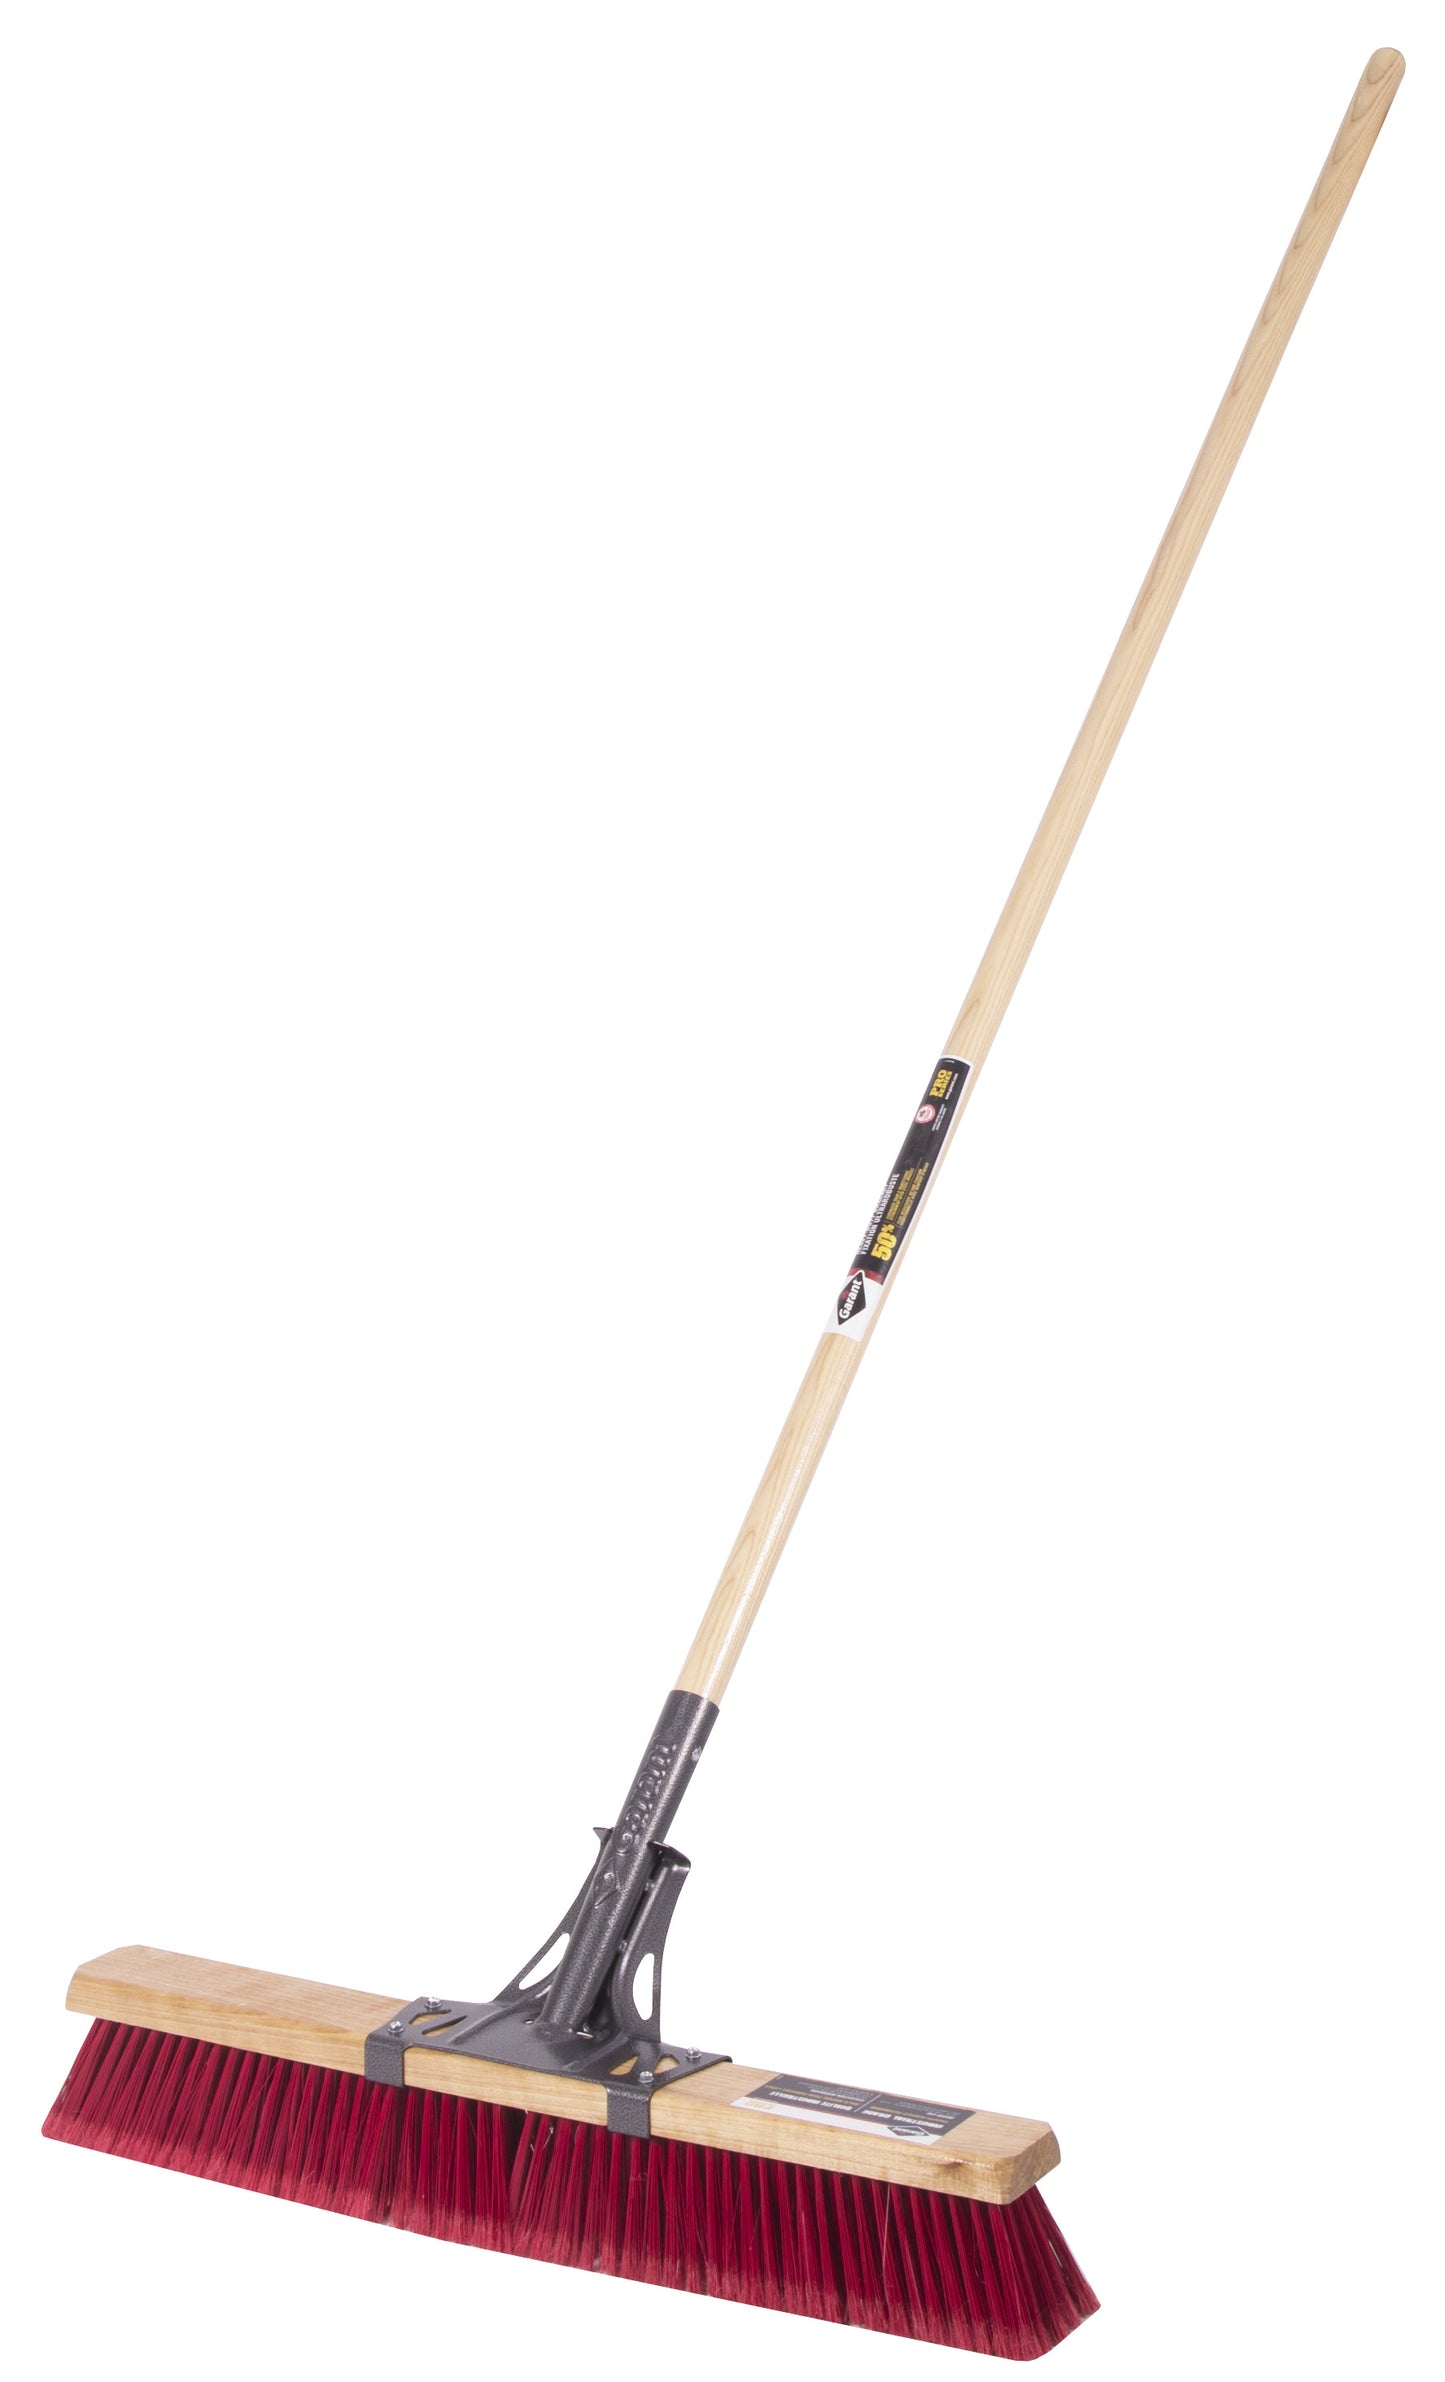 Push broom, 24", smooth, wood hdl